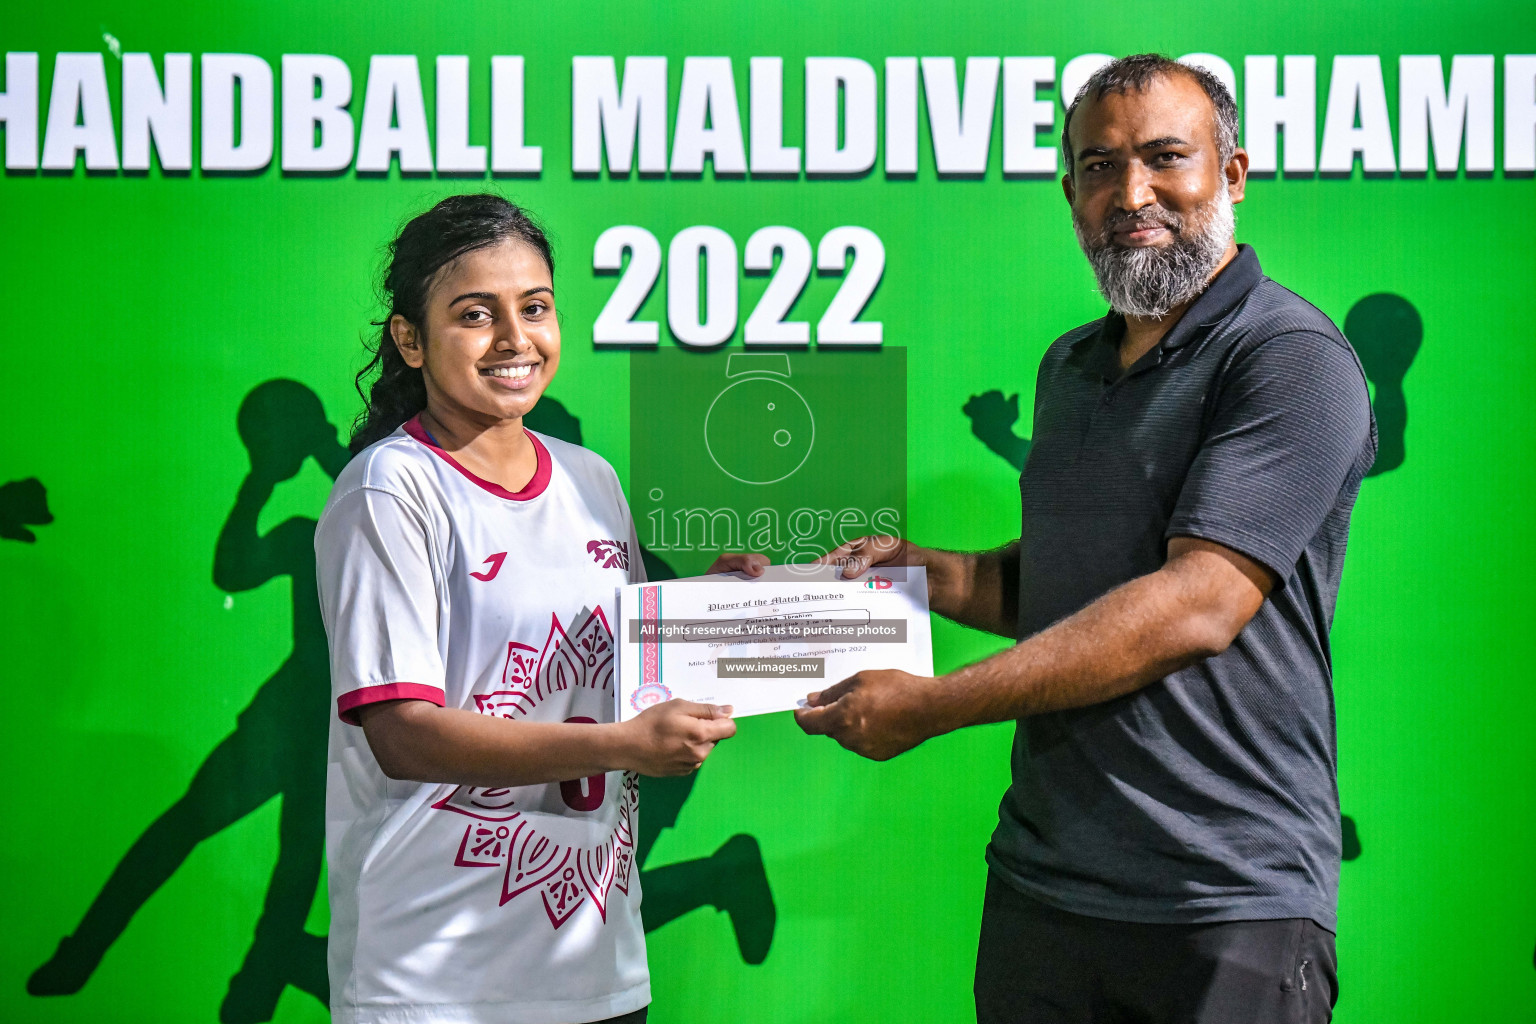 Milo 5th Handball Championship 2022 Womens Division Final REDHAWKS SC vs ORYX HBC on 7th Aug 2022, held in, Male', Maldives Photos: Nausham Waheed / Images.mv